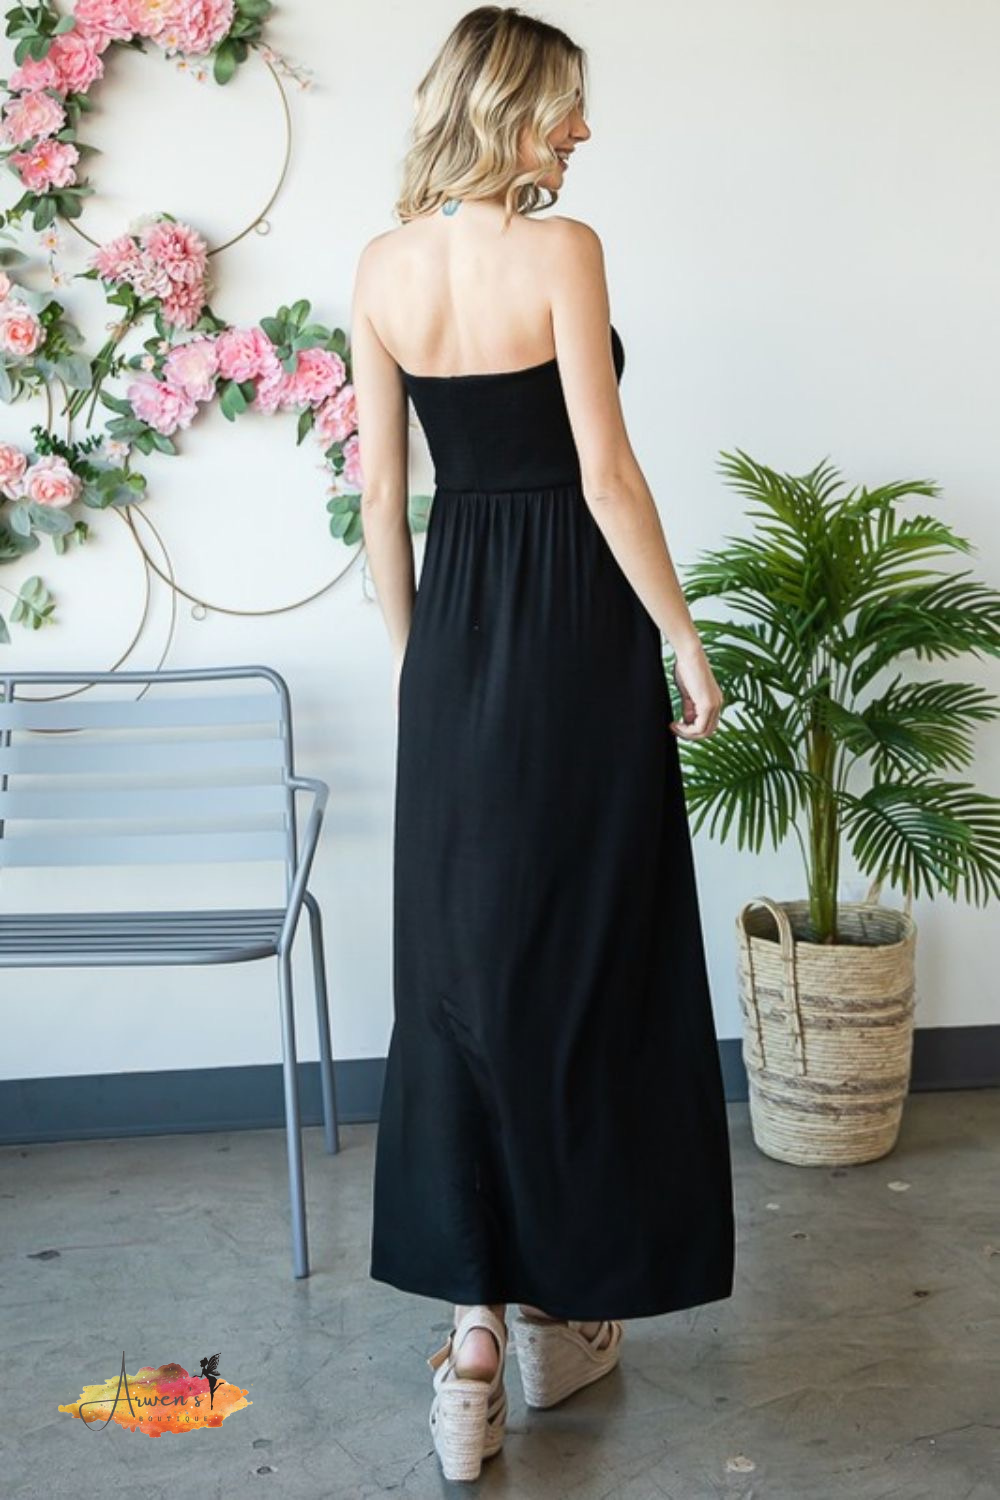 Heimish Full Size Strapless Maxi Dress - Shop women apparel, Jewelry, bath & beauty products online - Arwen's Boutique